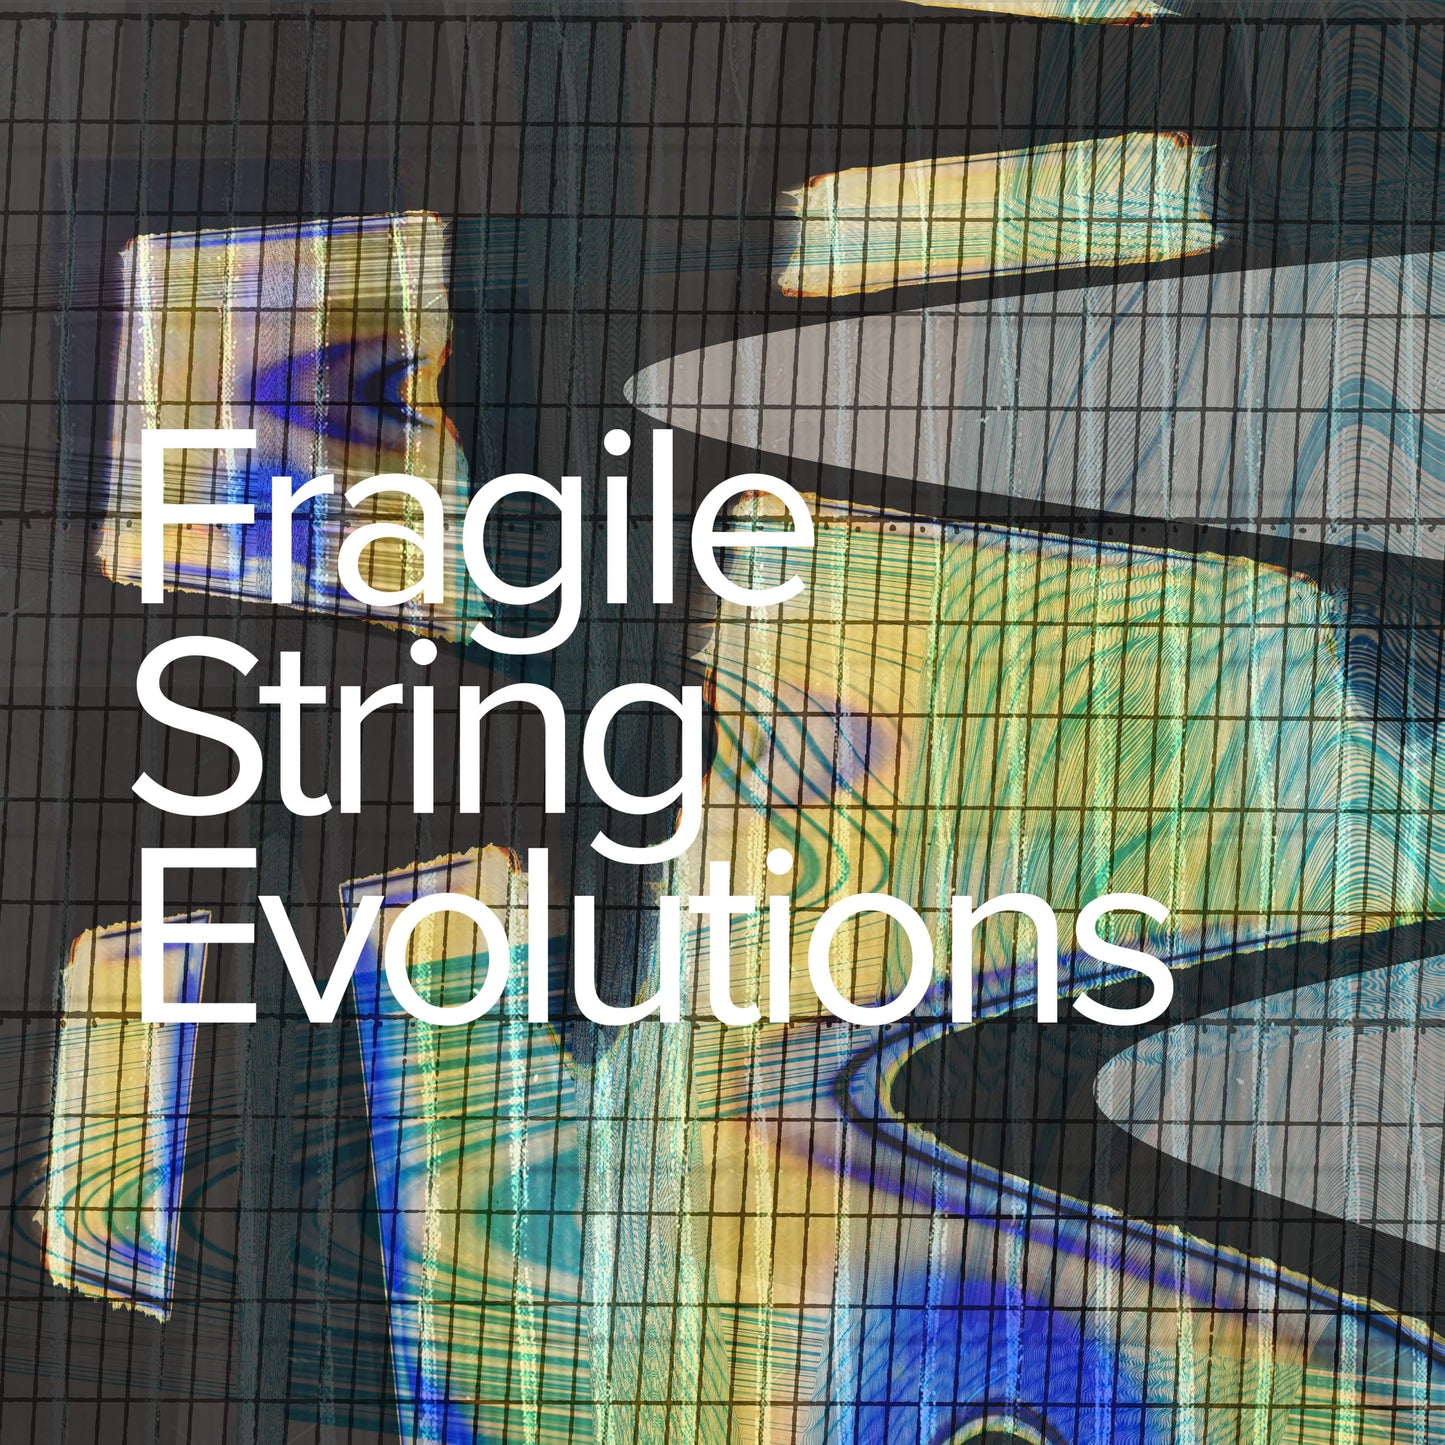 Fragile String Evolutions